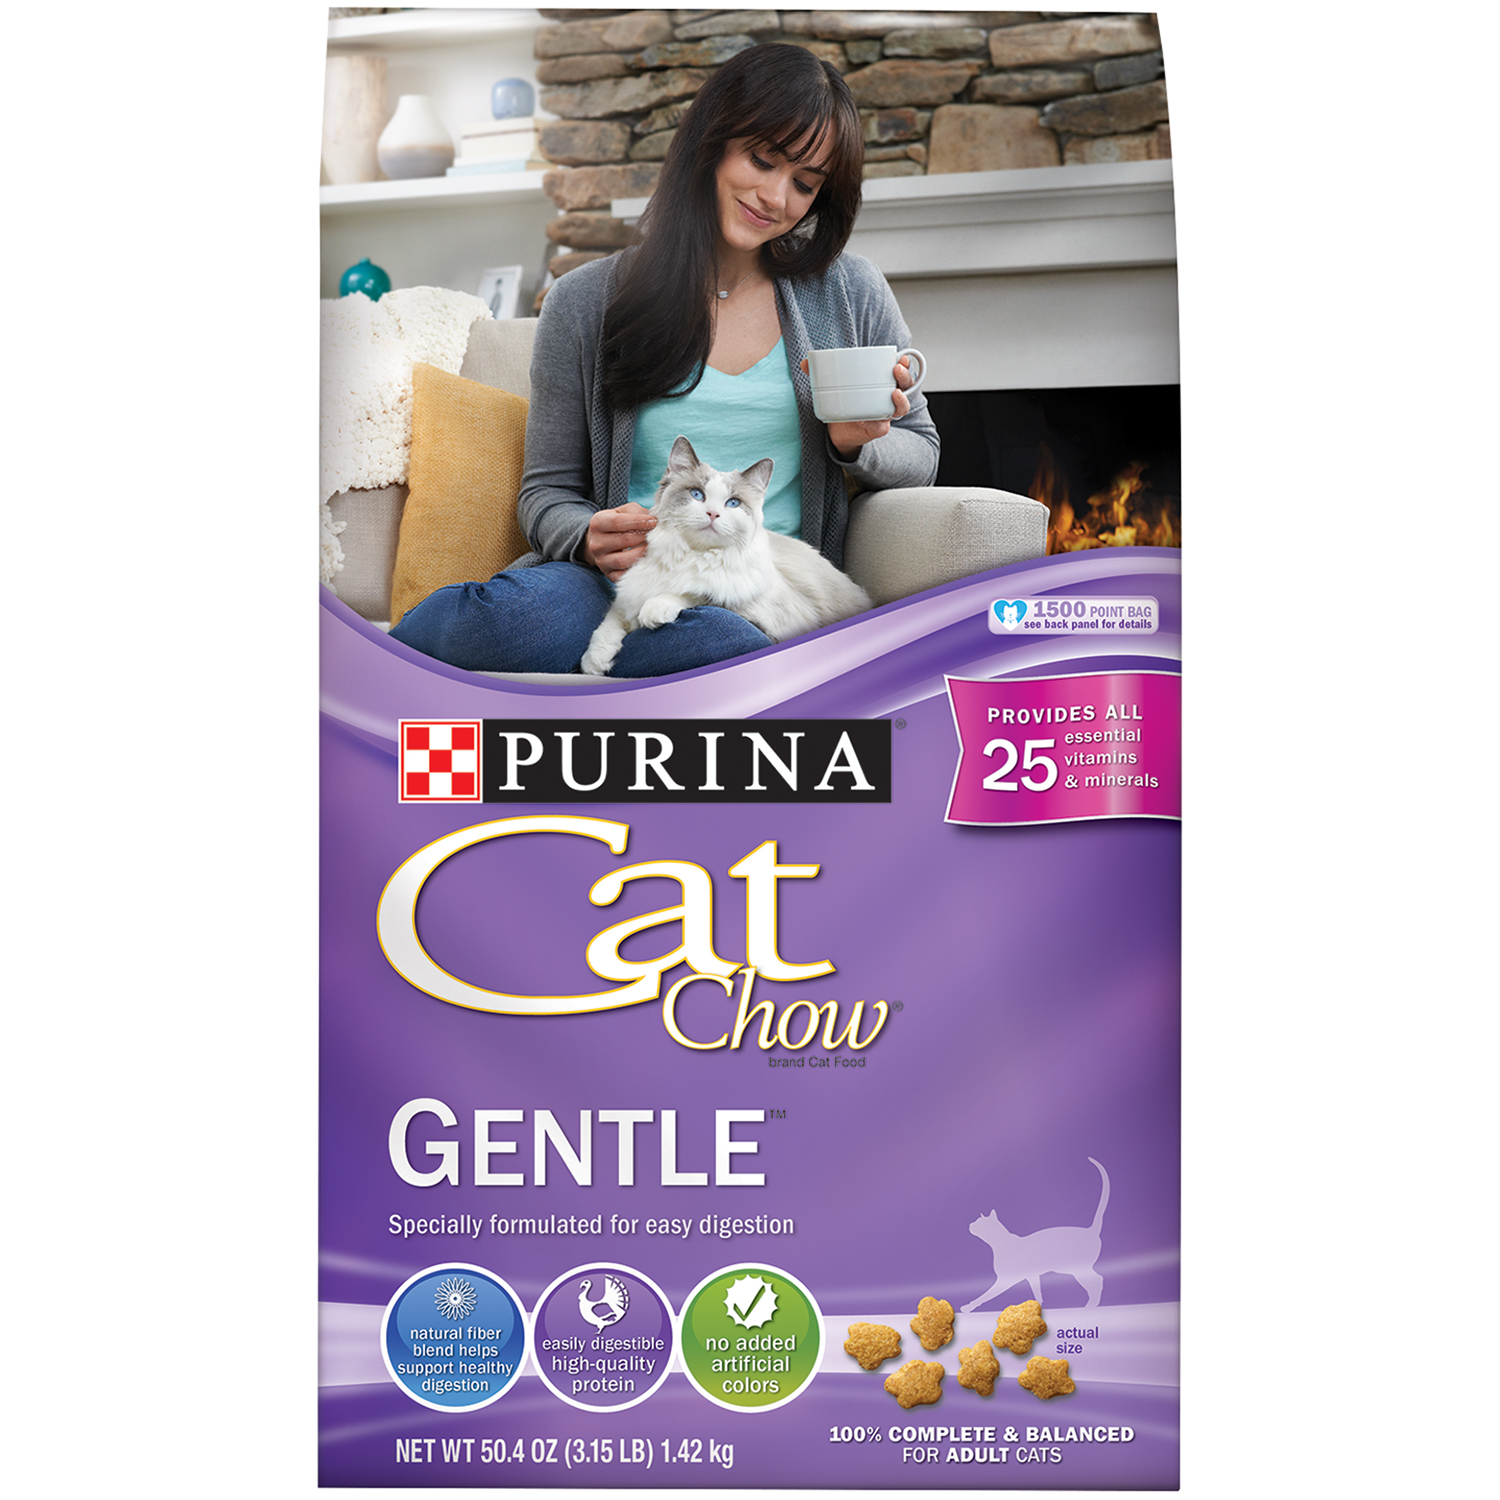 Purina Cat Chow Gentle Cat Food 3.15 lb. Bag Shop Your Way Online